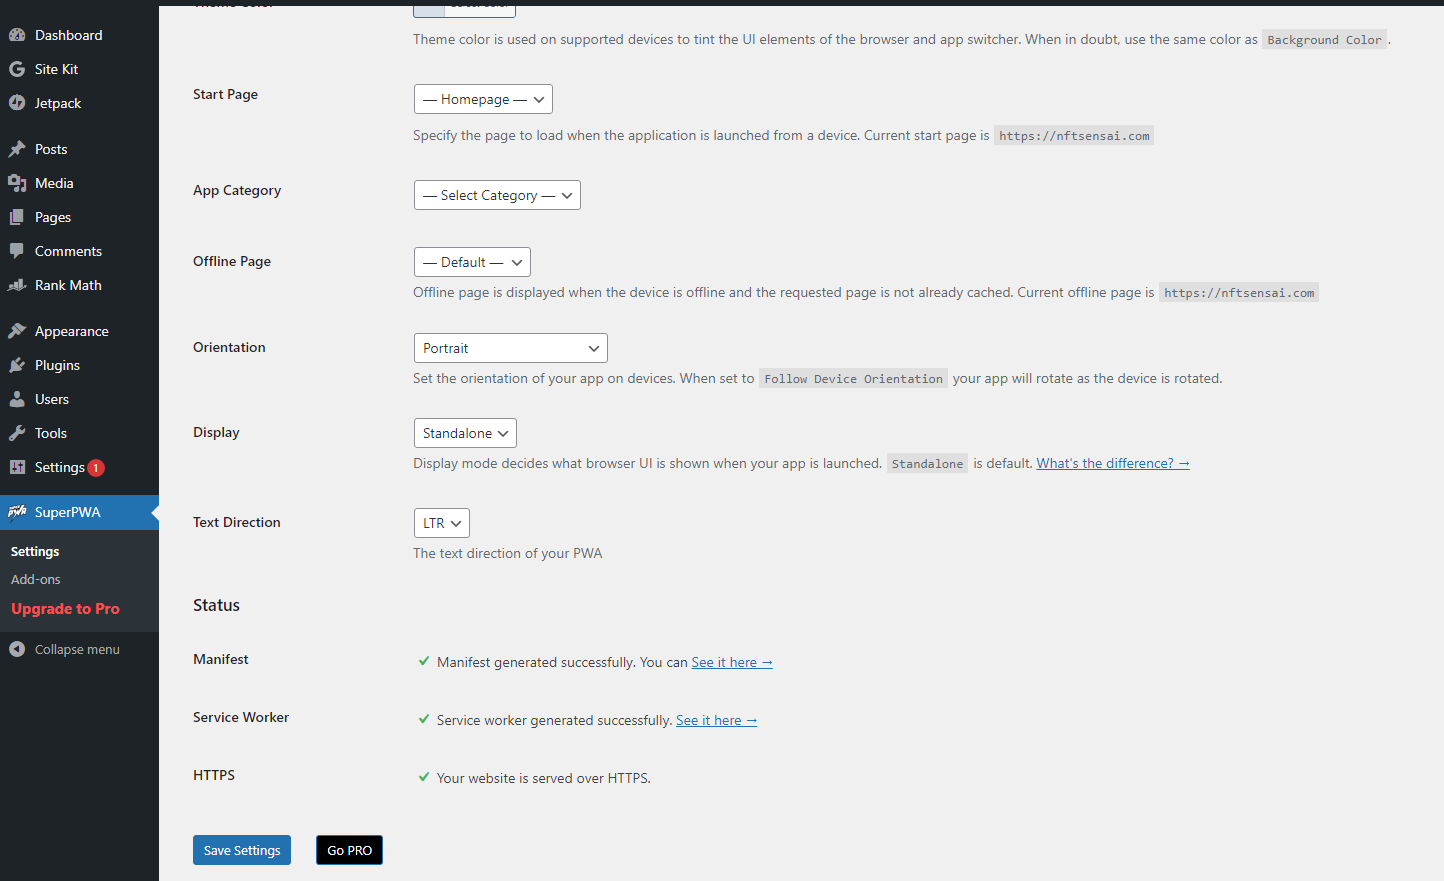 SuperPWA plugin configuration options in the WordPress dashboard